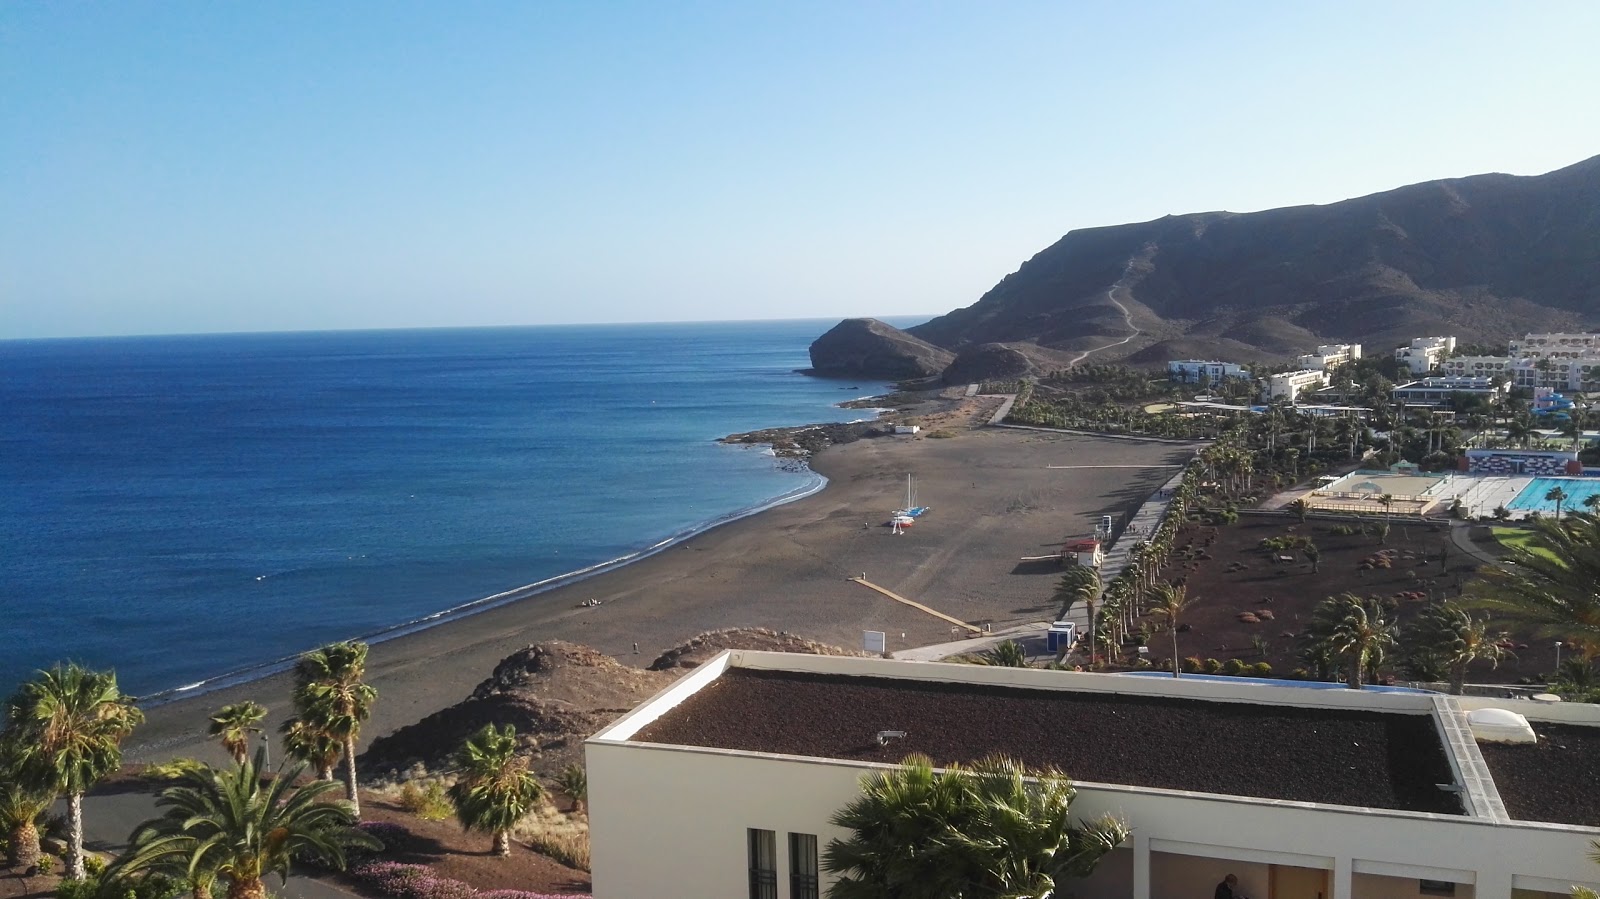 Photo of Playa de los Pobres with gray sand surface